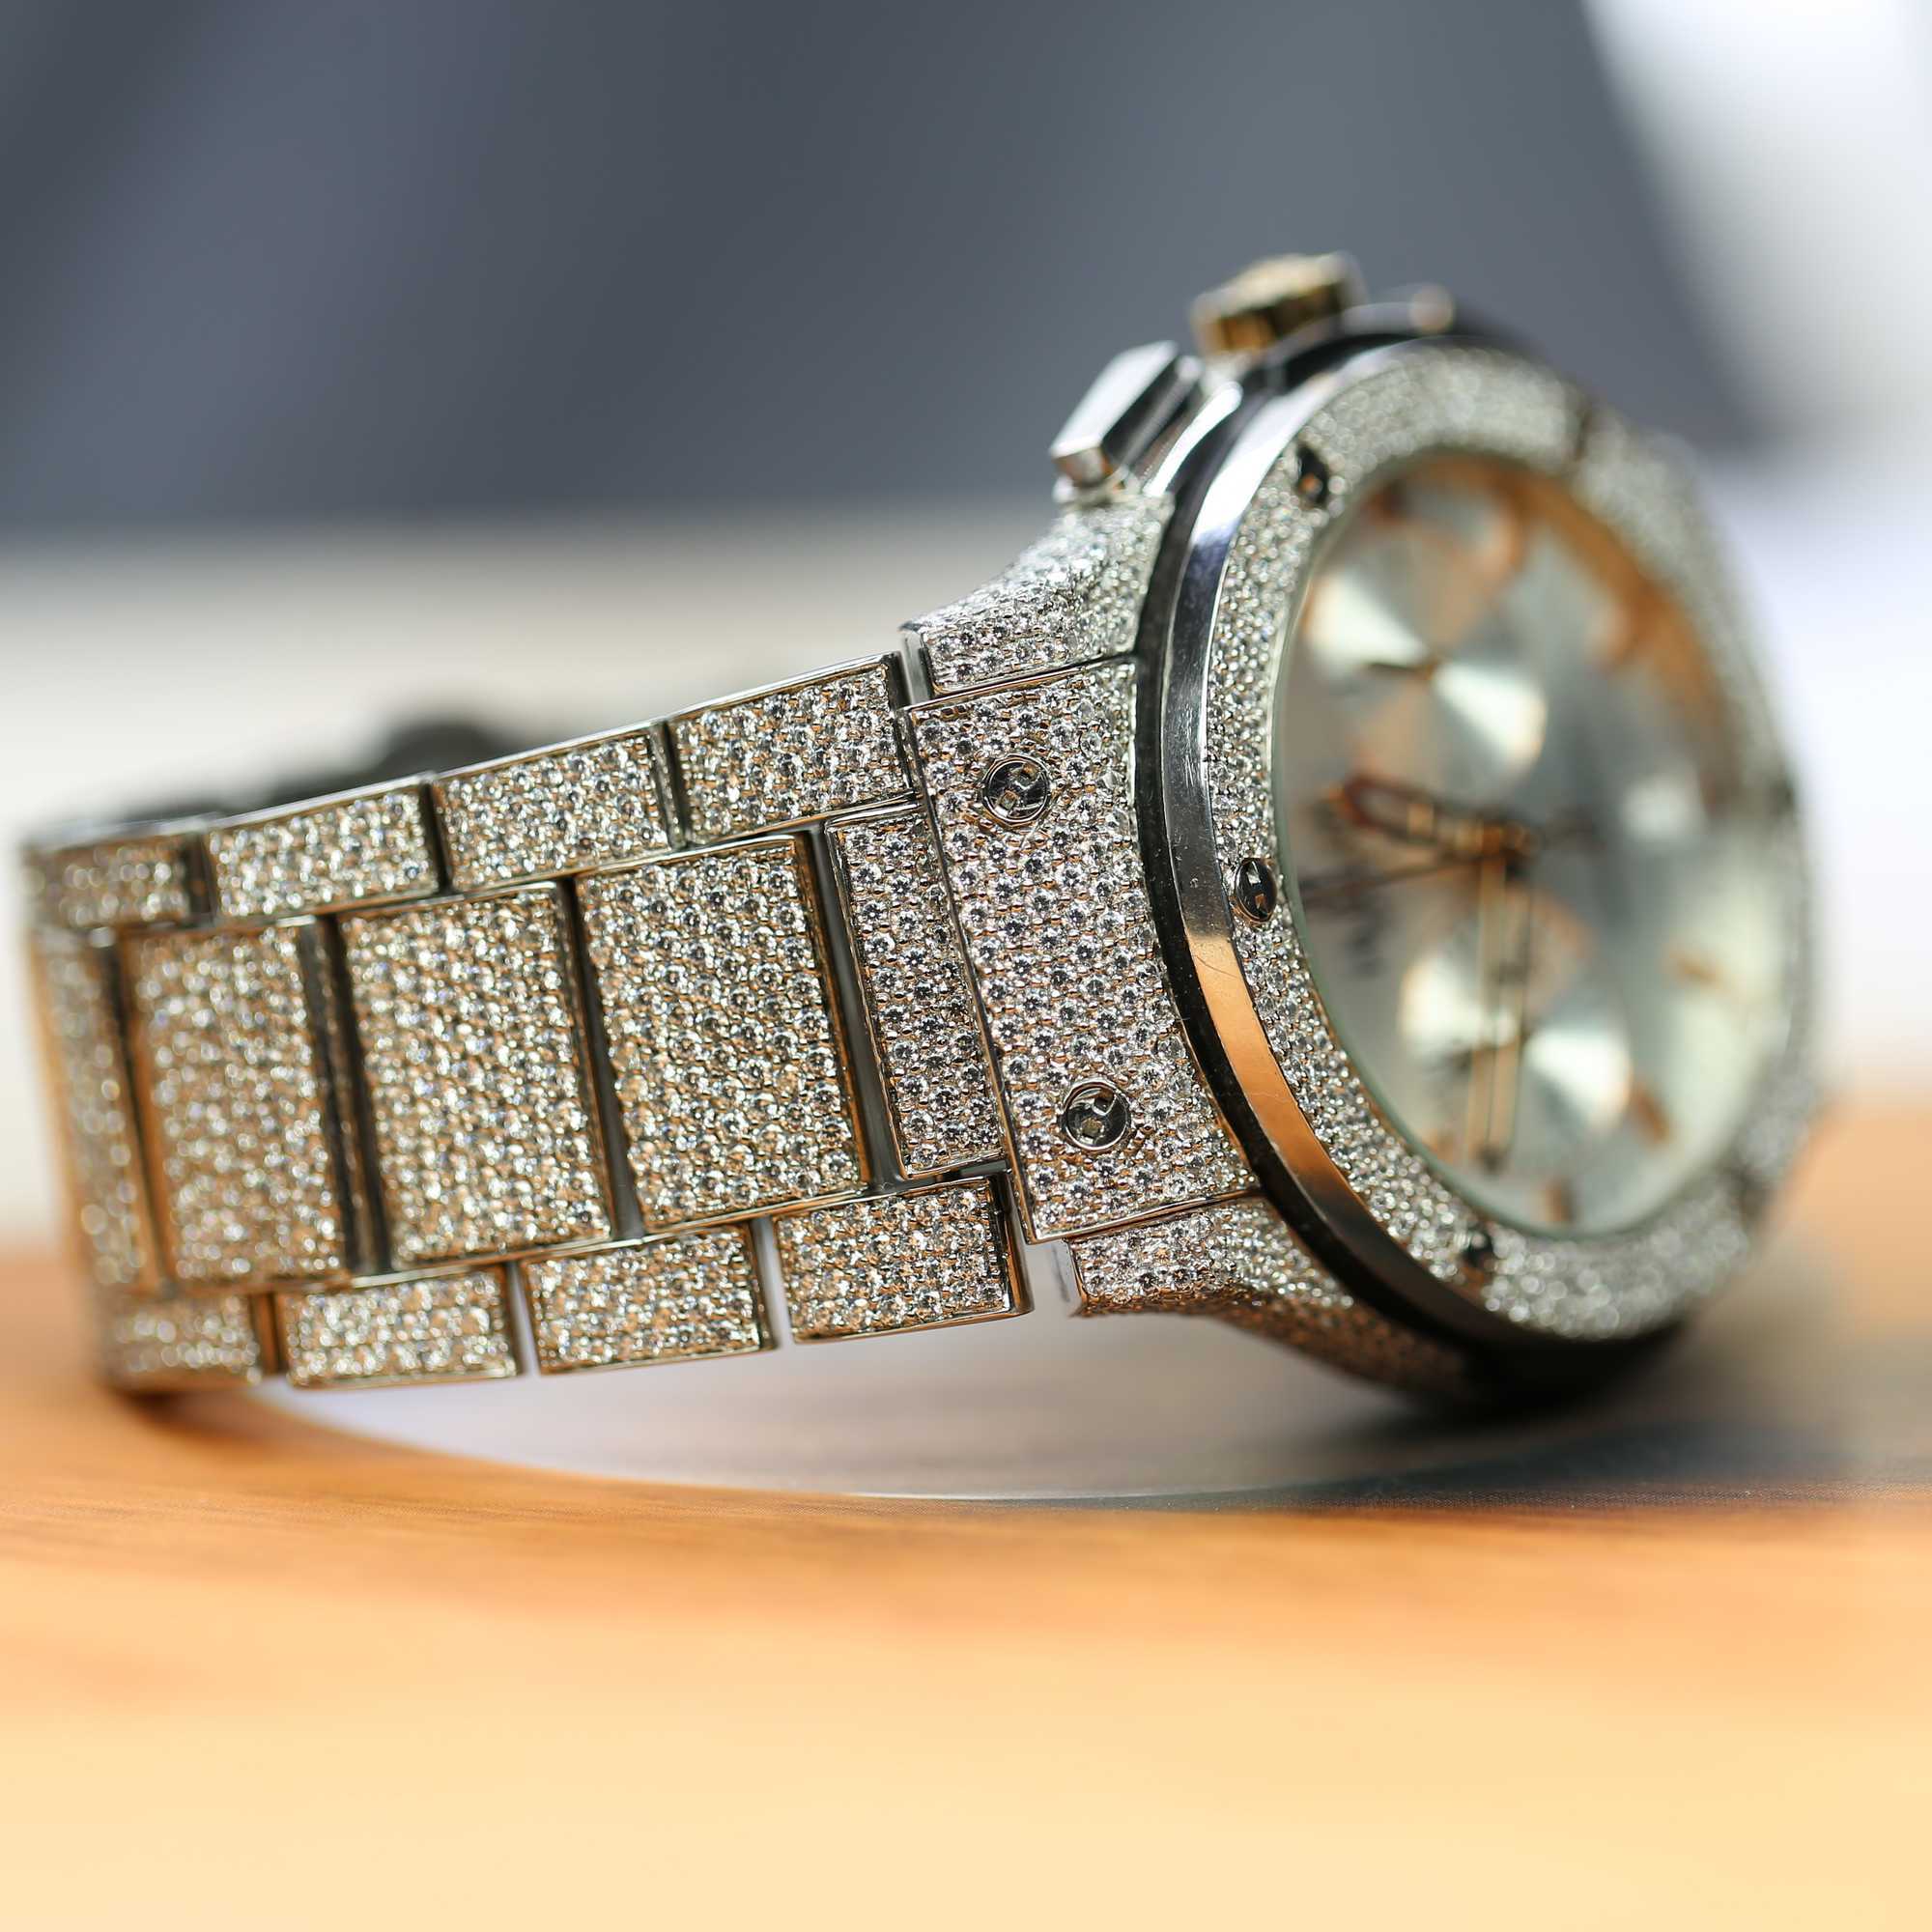 Andere Uhren Armbanduhren Iced Out anpassen Diamant-Luxus-Herrenuhr handgefertigter edler Schmuckhersteller VVS1 DiamantuhrFPR8RKDV